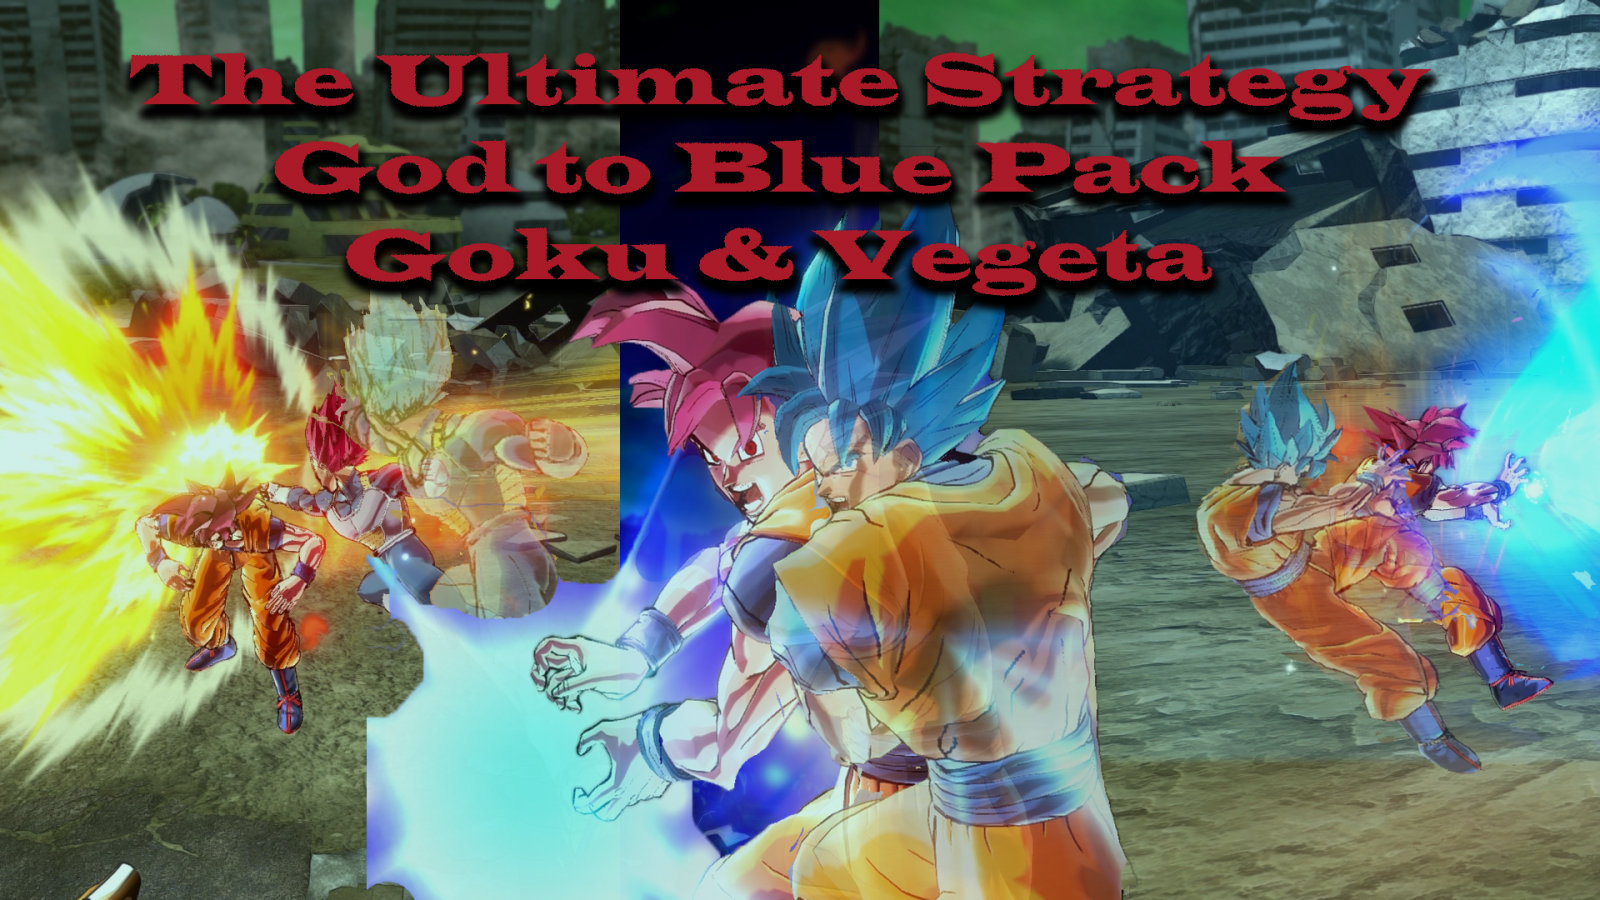 Super Dark Kamehameha Vs Final Flash! Goku Black Vs Vegeta Gameplay -  Dragon Ball Xenoverse 2 